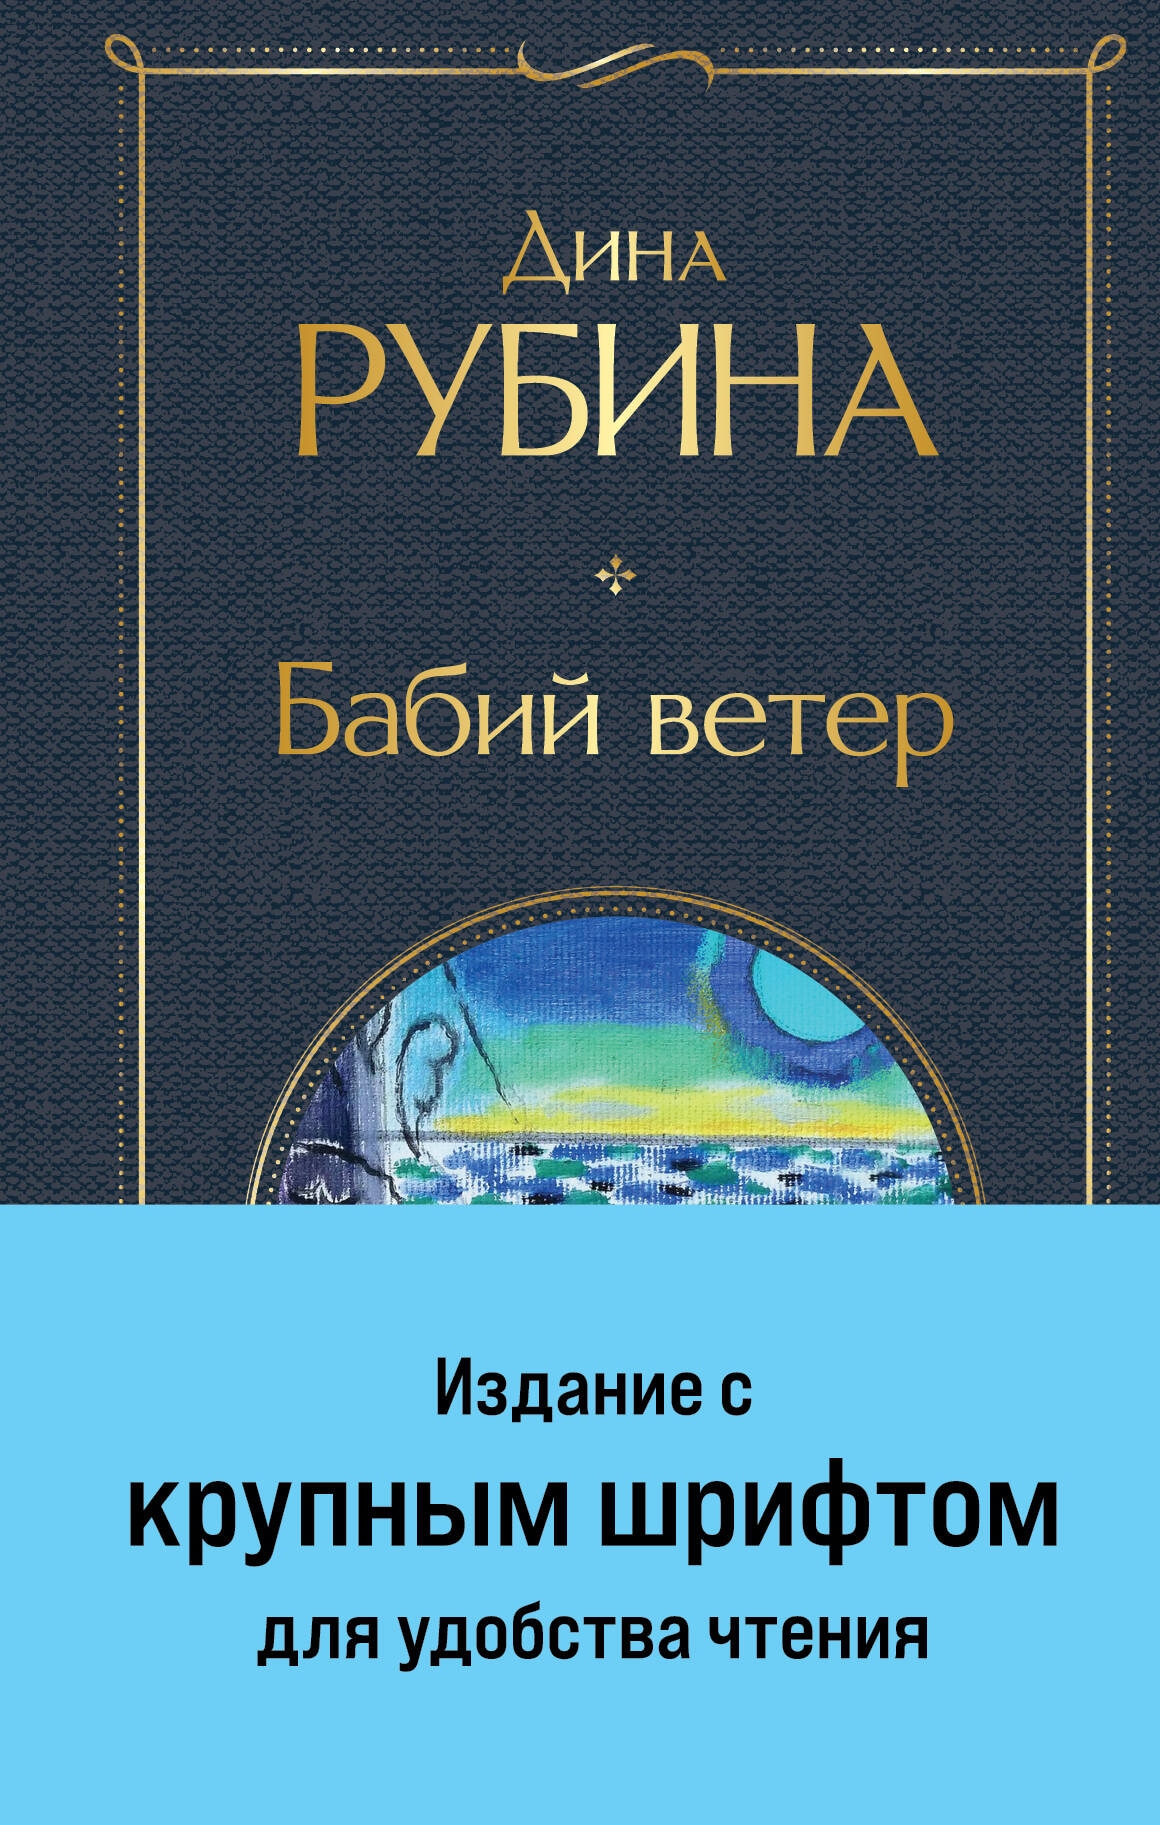 Book “Бабий ветер” by Дина Рубина — 2023